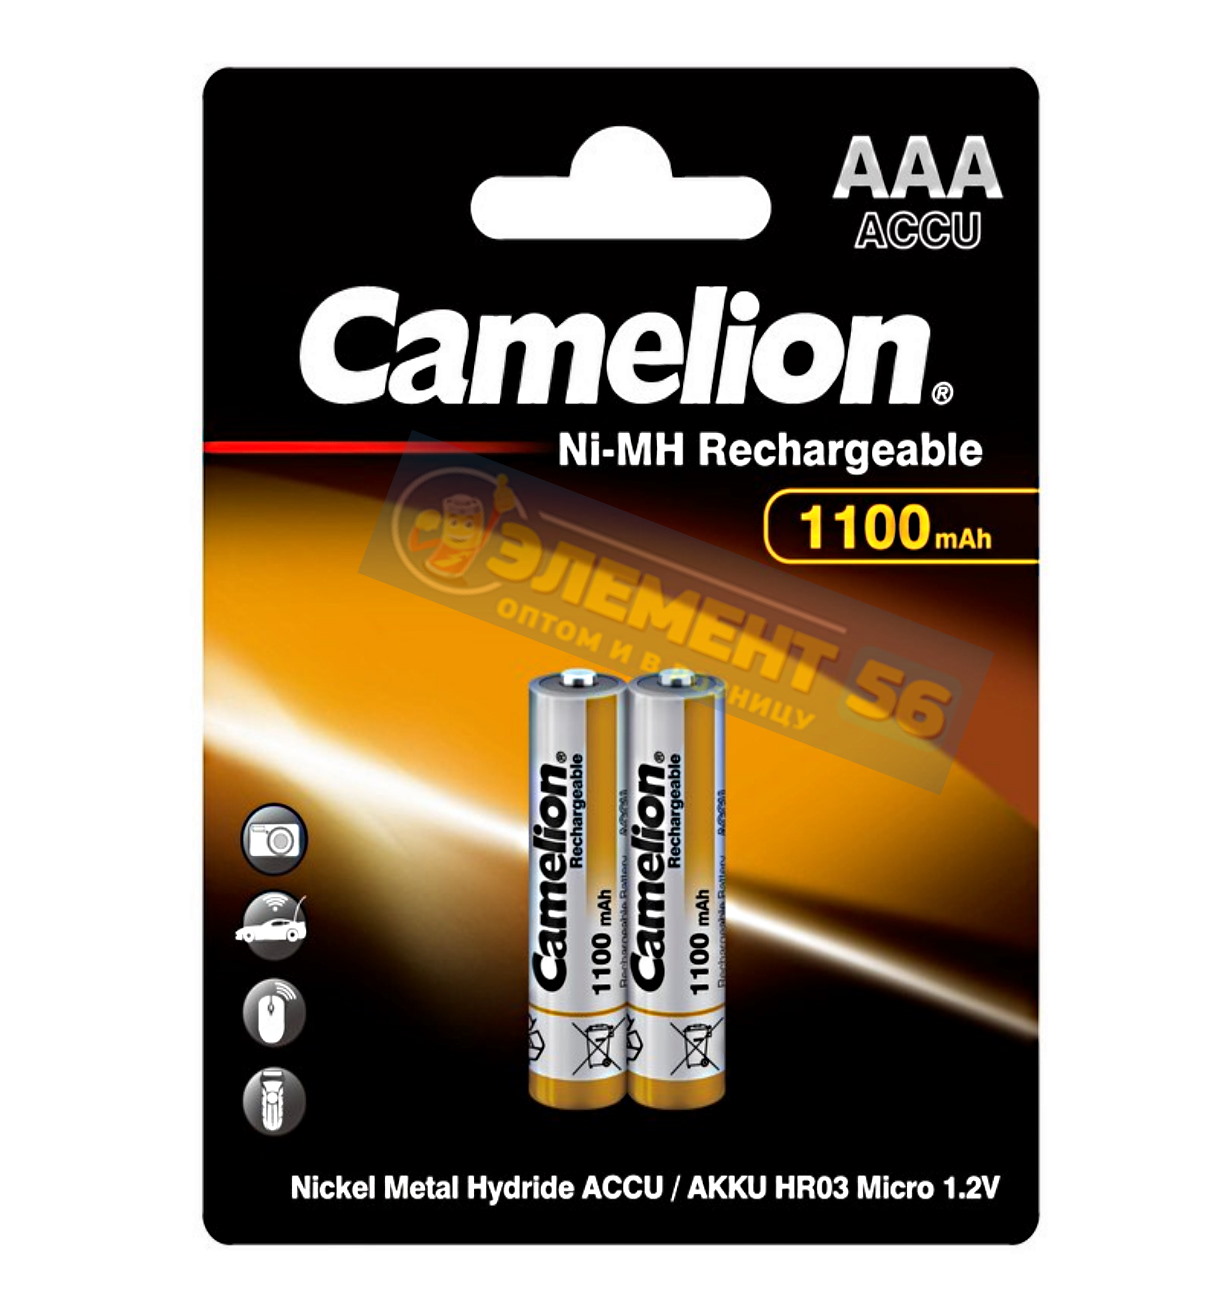 Аккумулятор CAMELION AAA, HR03 (1100 mAh) MN2400, А286, 24A, AM4, UM4, HP16 2BL (2) (24) (480)